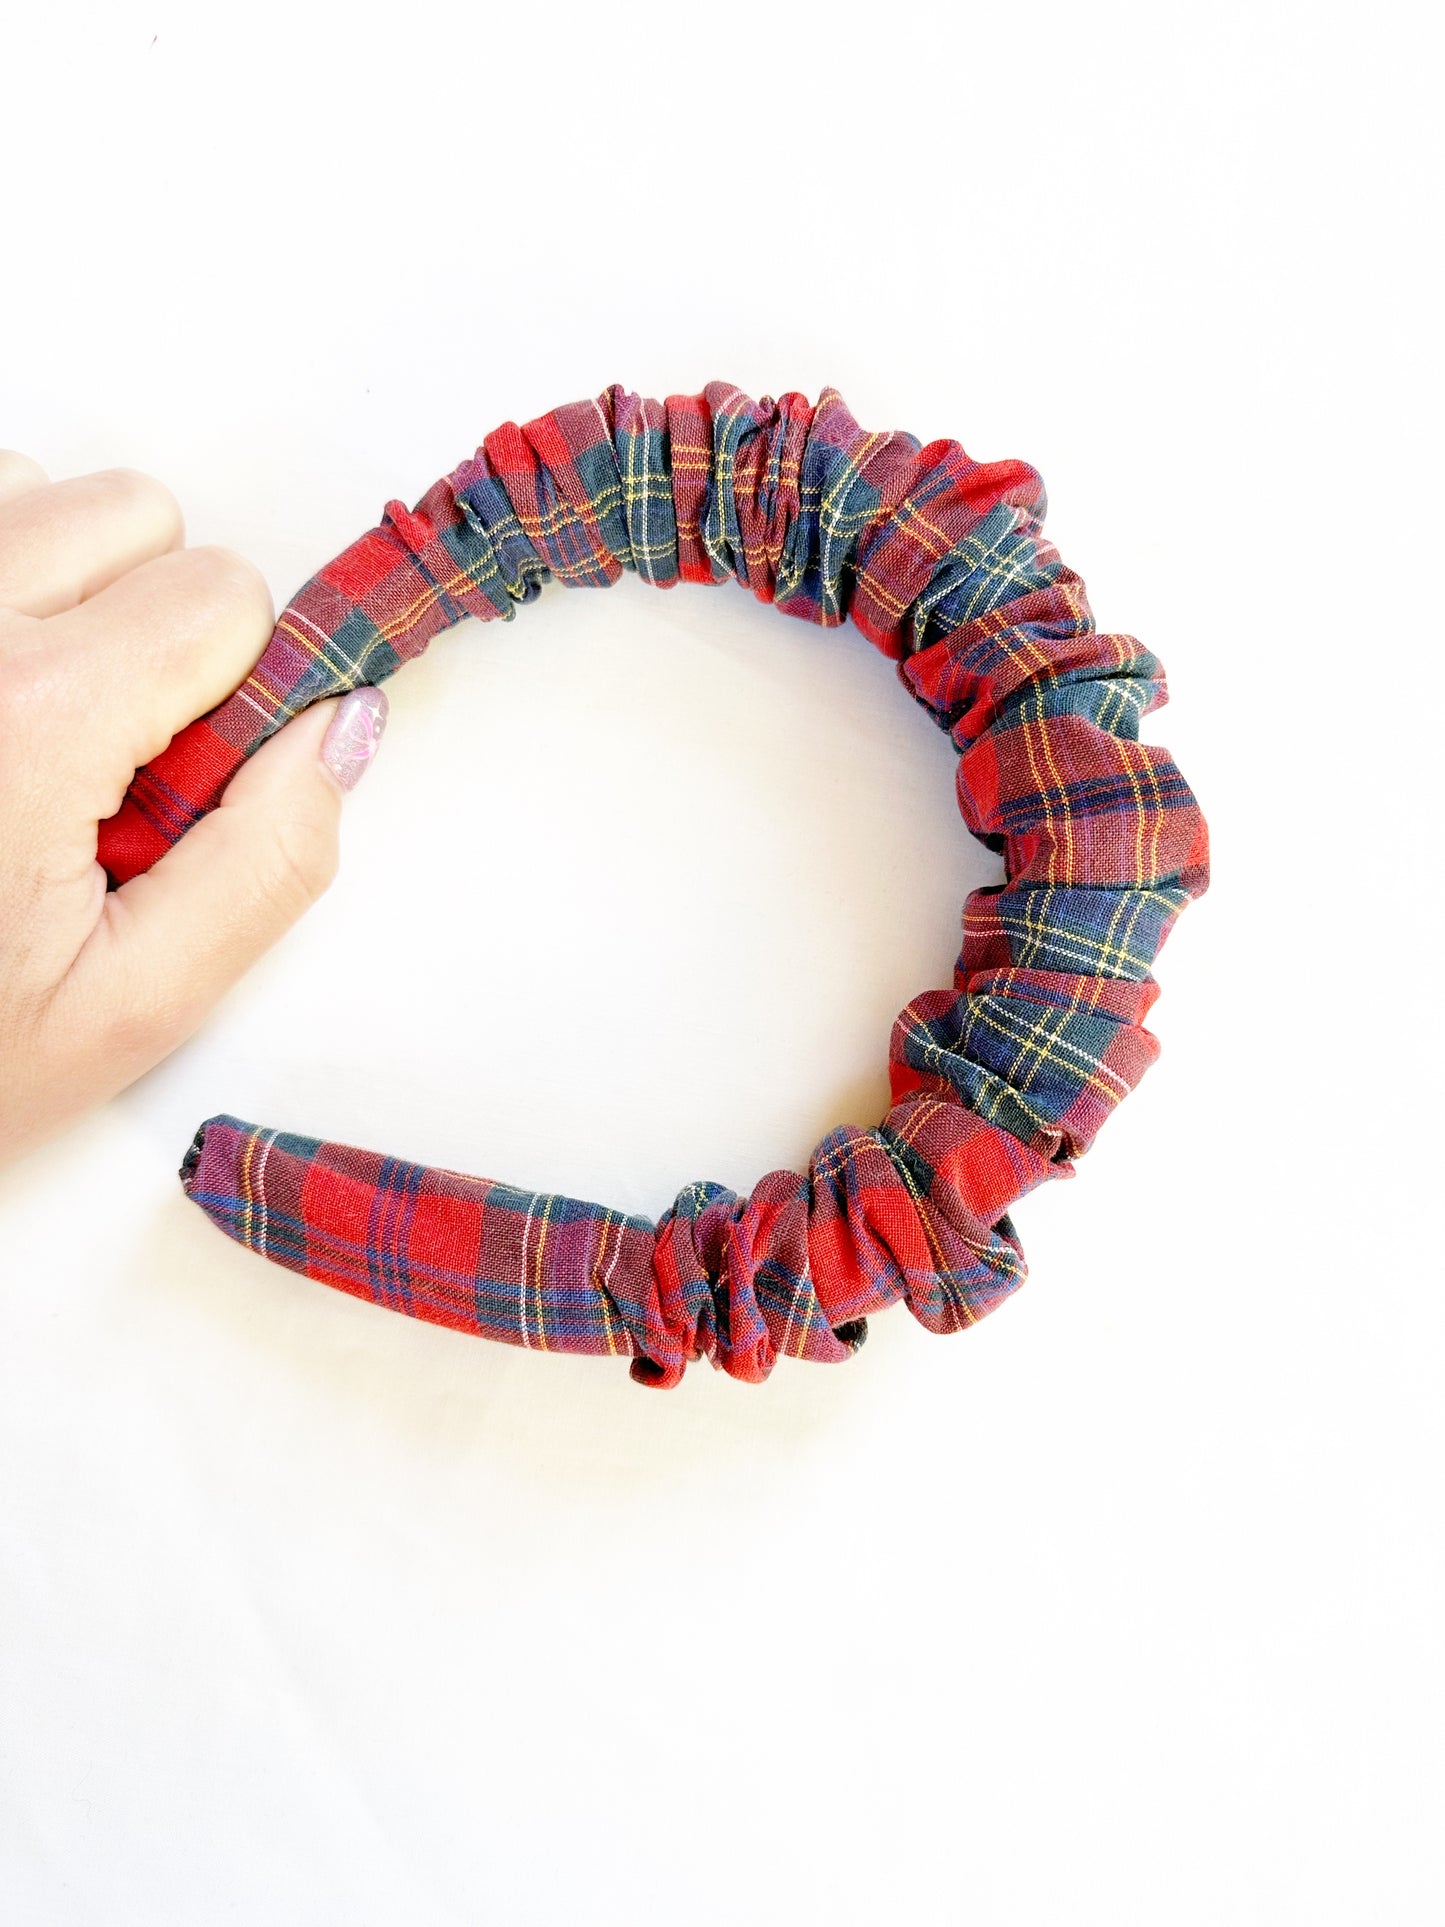 Ruffled Headband in red tartan cotton